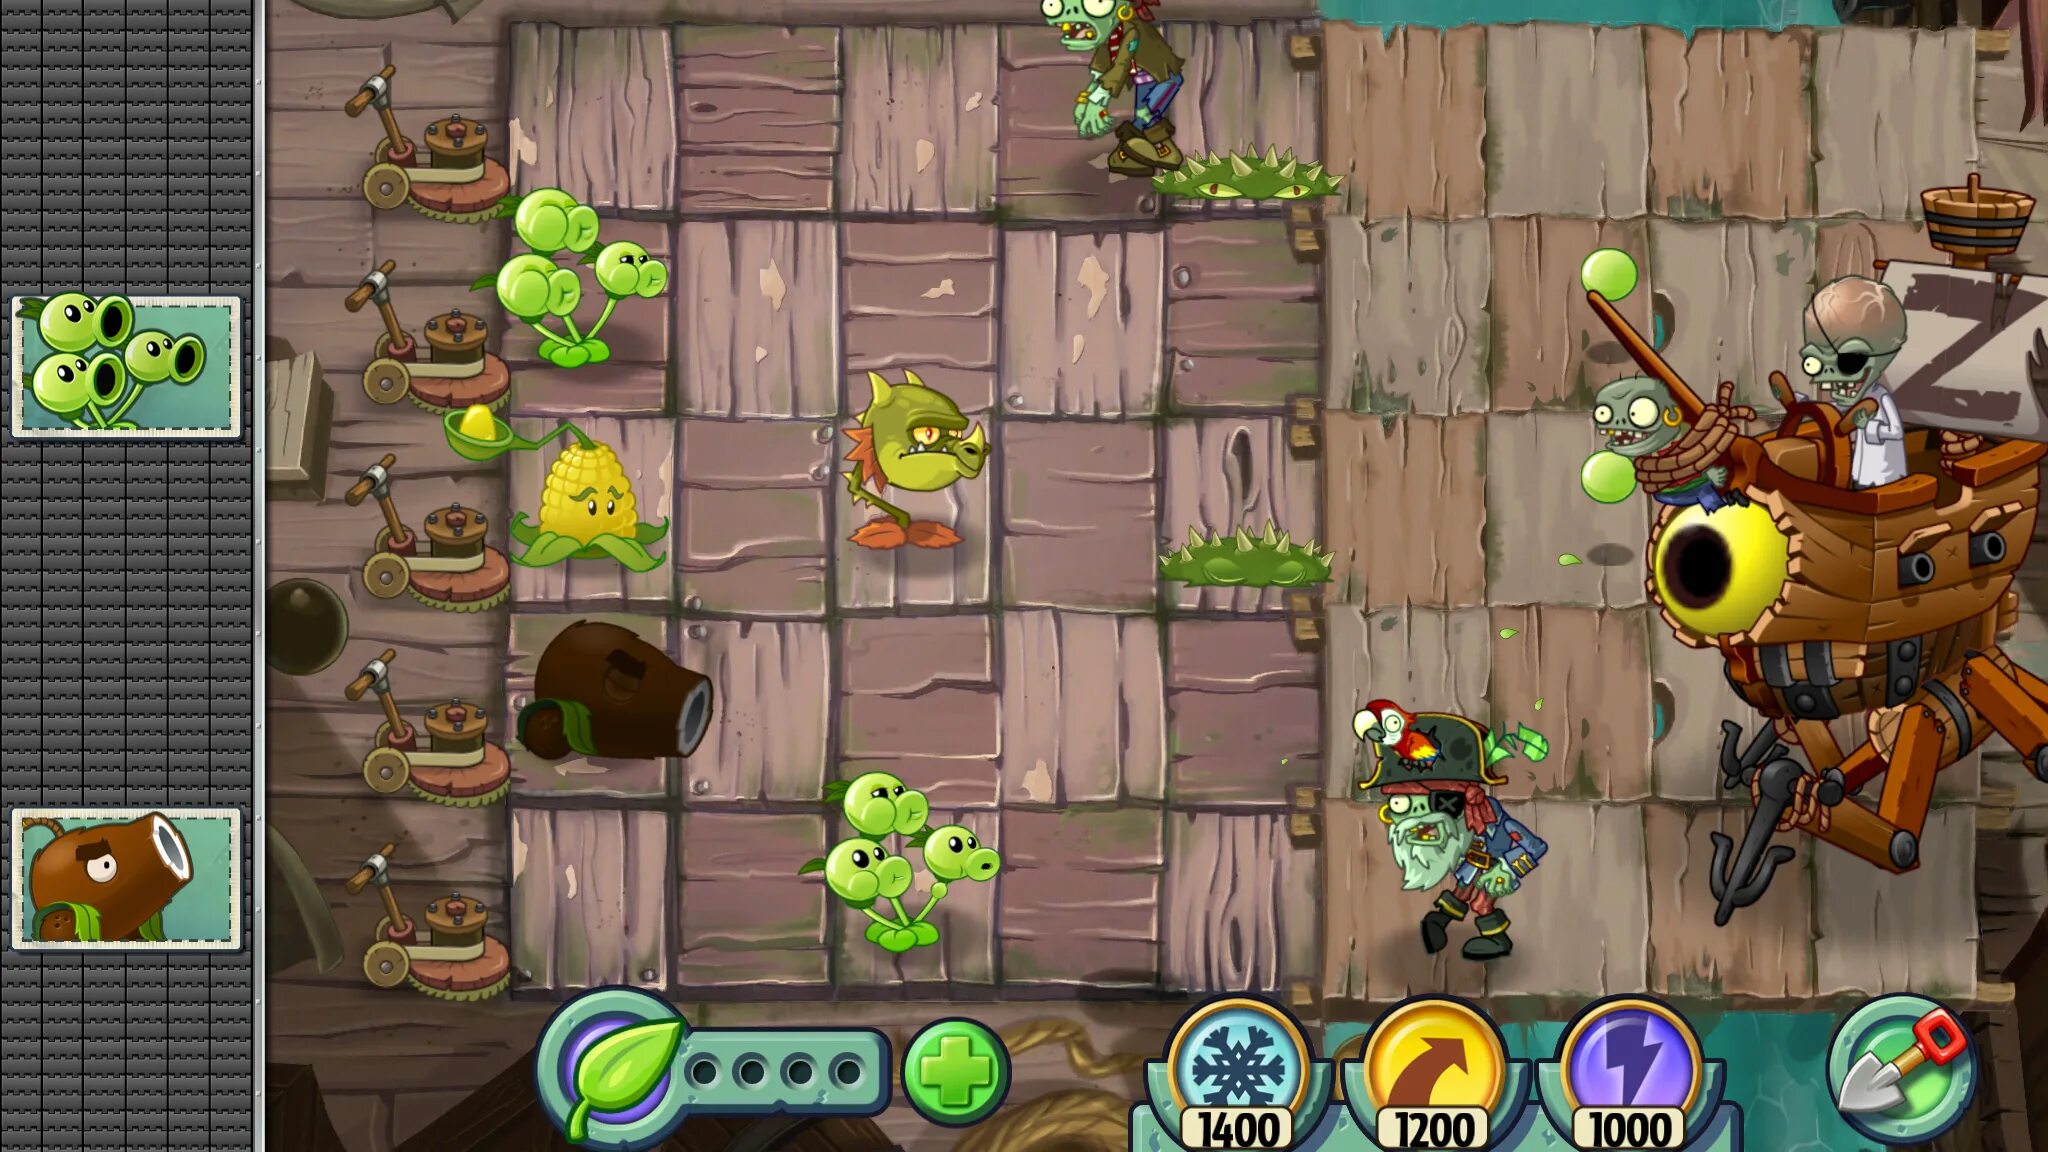 Plant vc. Растения против зомби 2. Зомби из Plants vs Zombies 2. Plants vs Zombies 2 карта. Растения против зомби 2 Зомбот сфинксинатор.